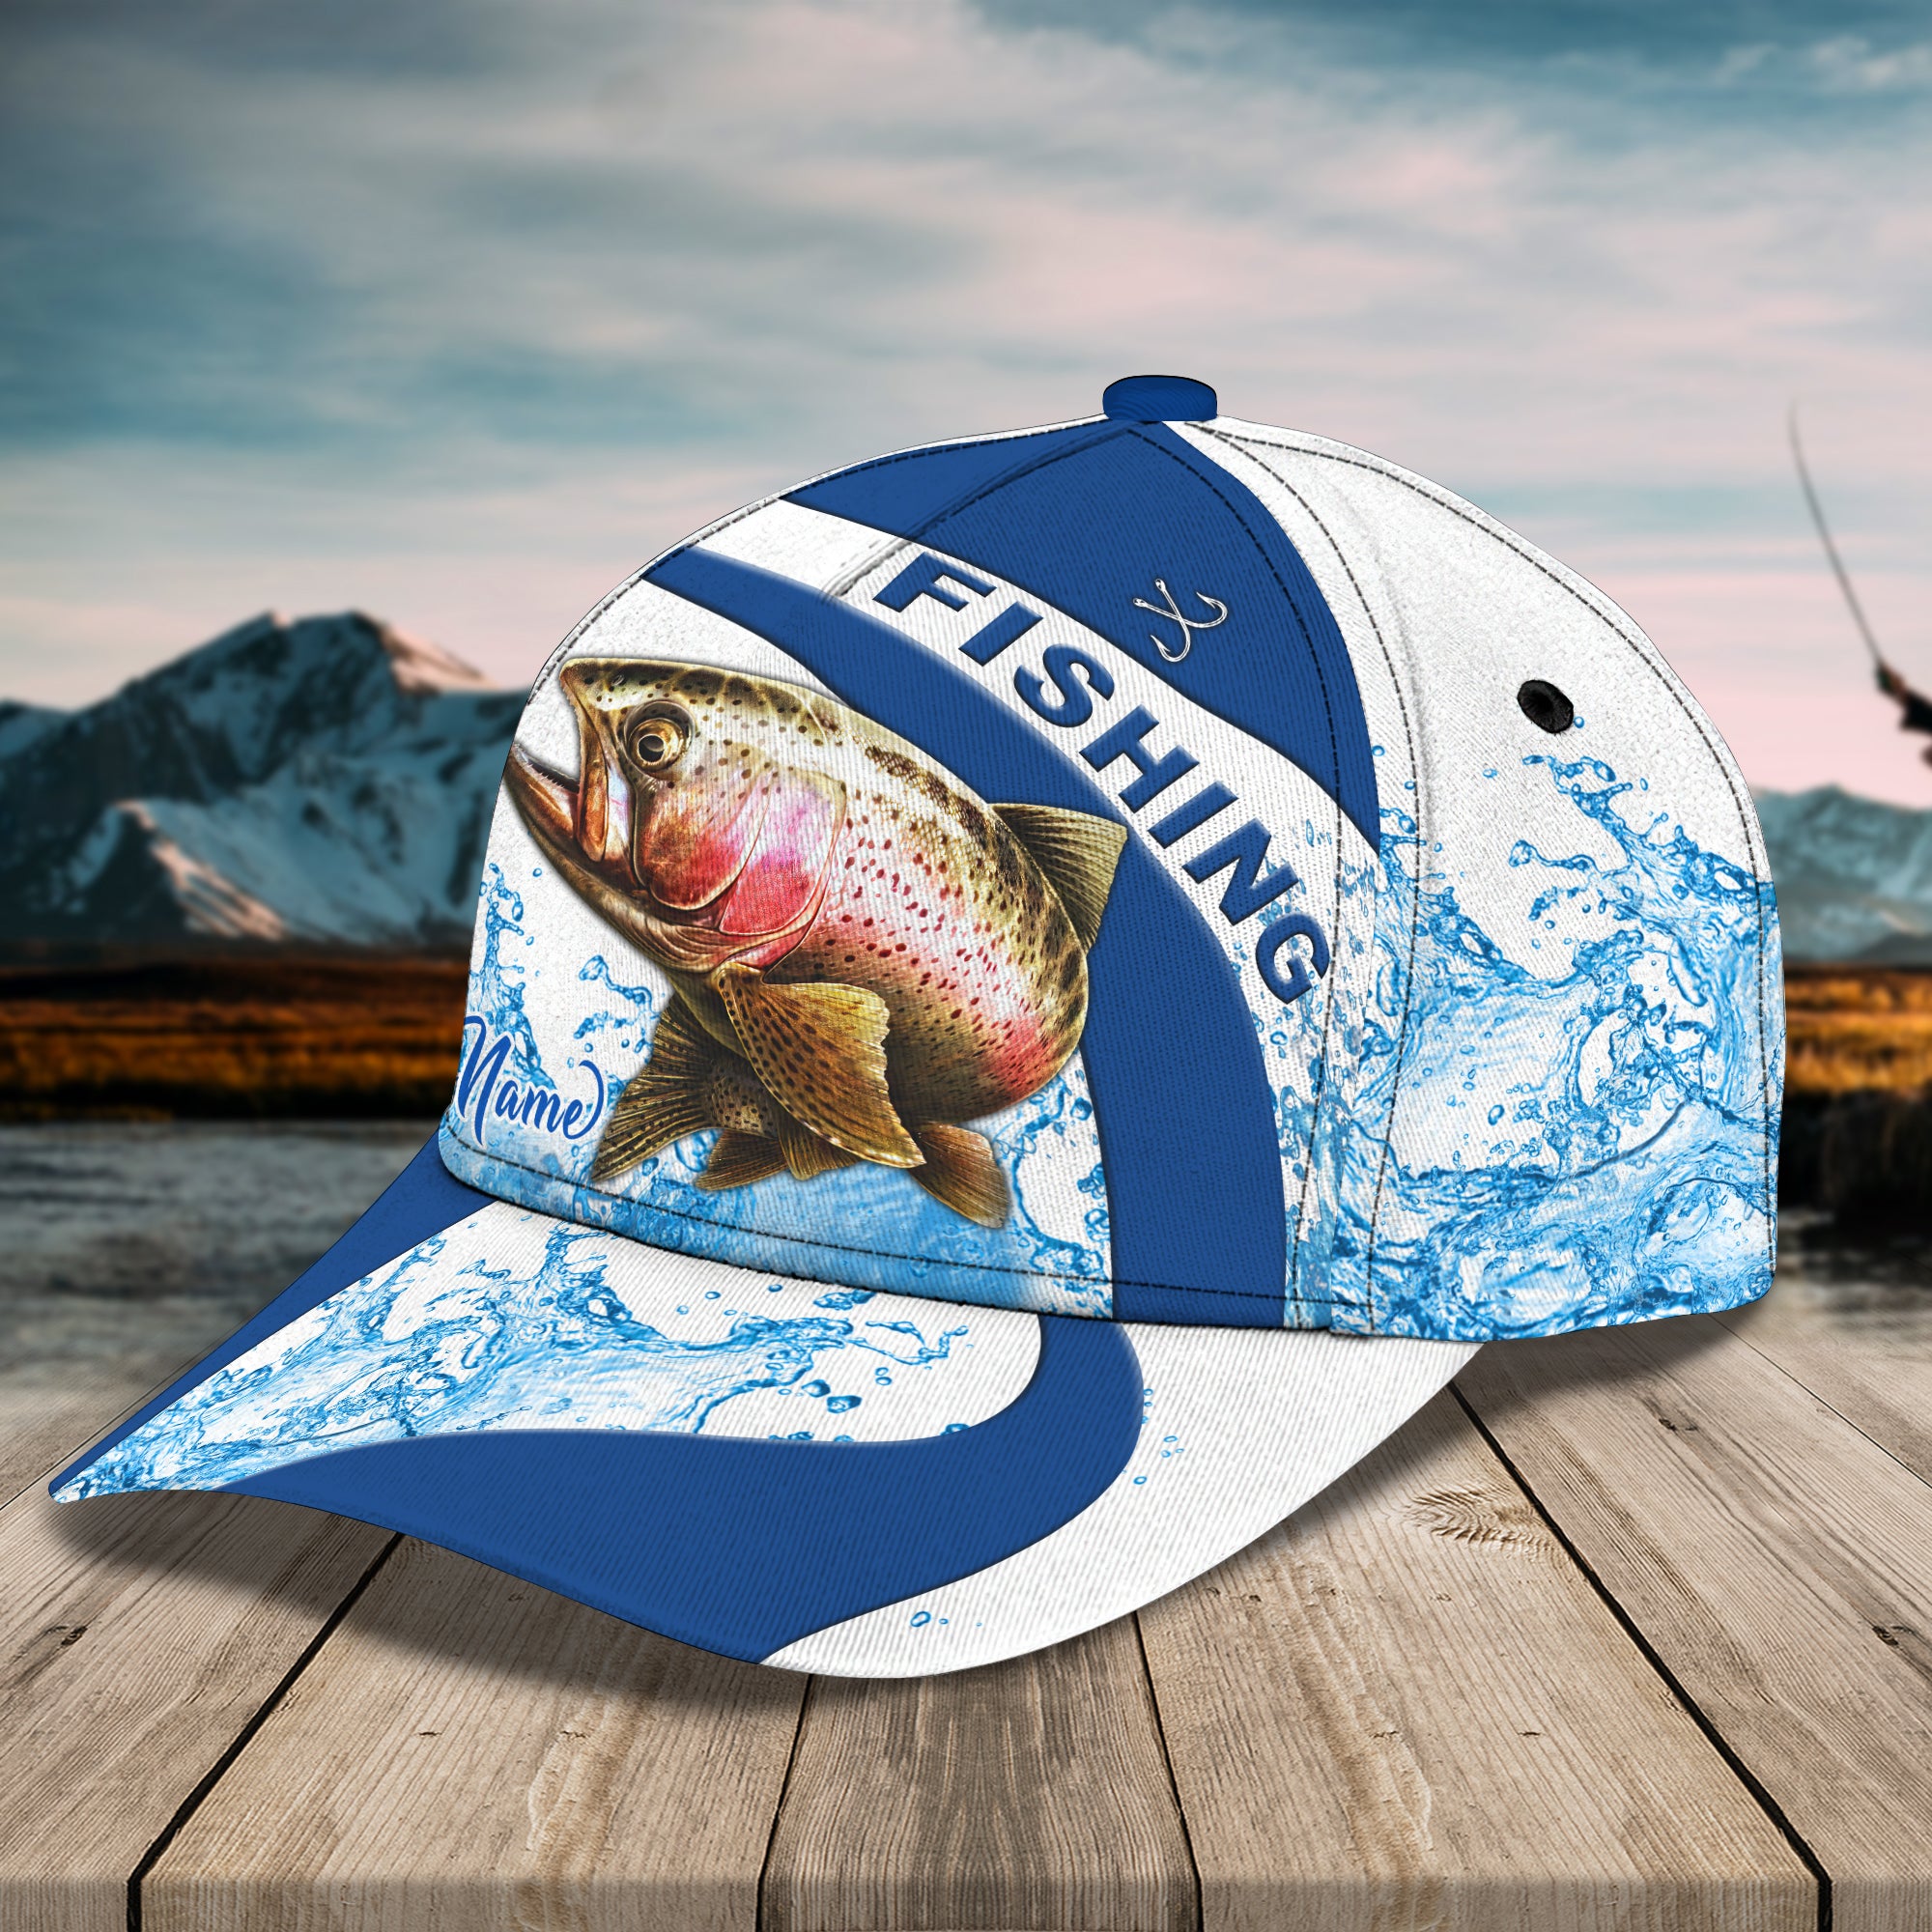 Fishing - Personalized Name Cap 8